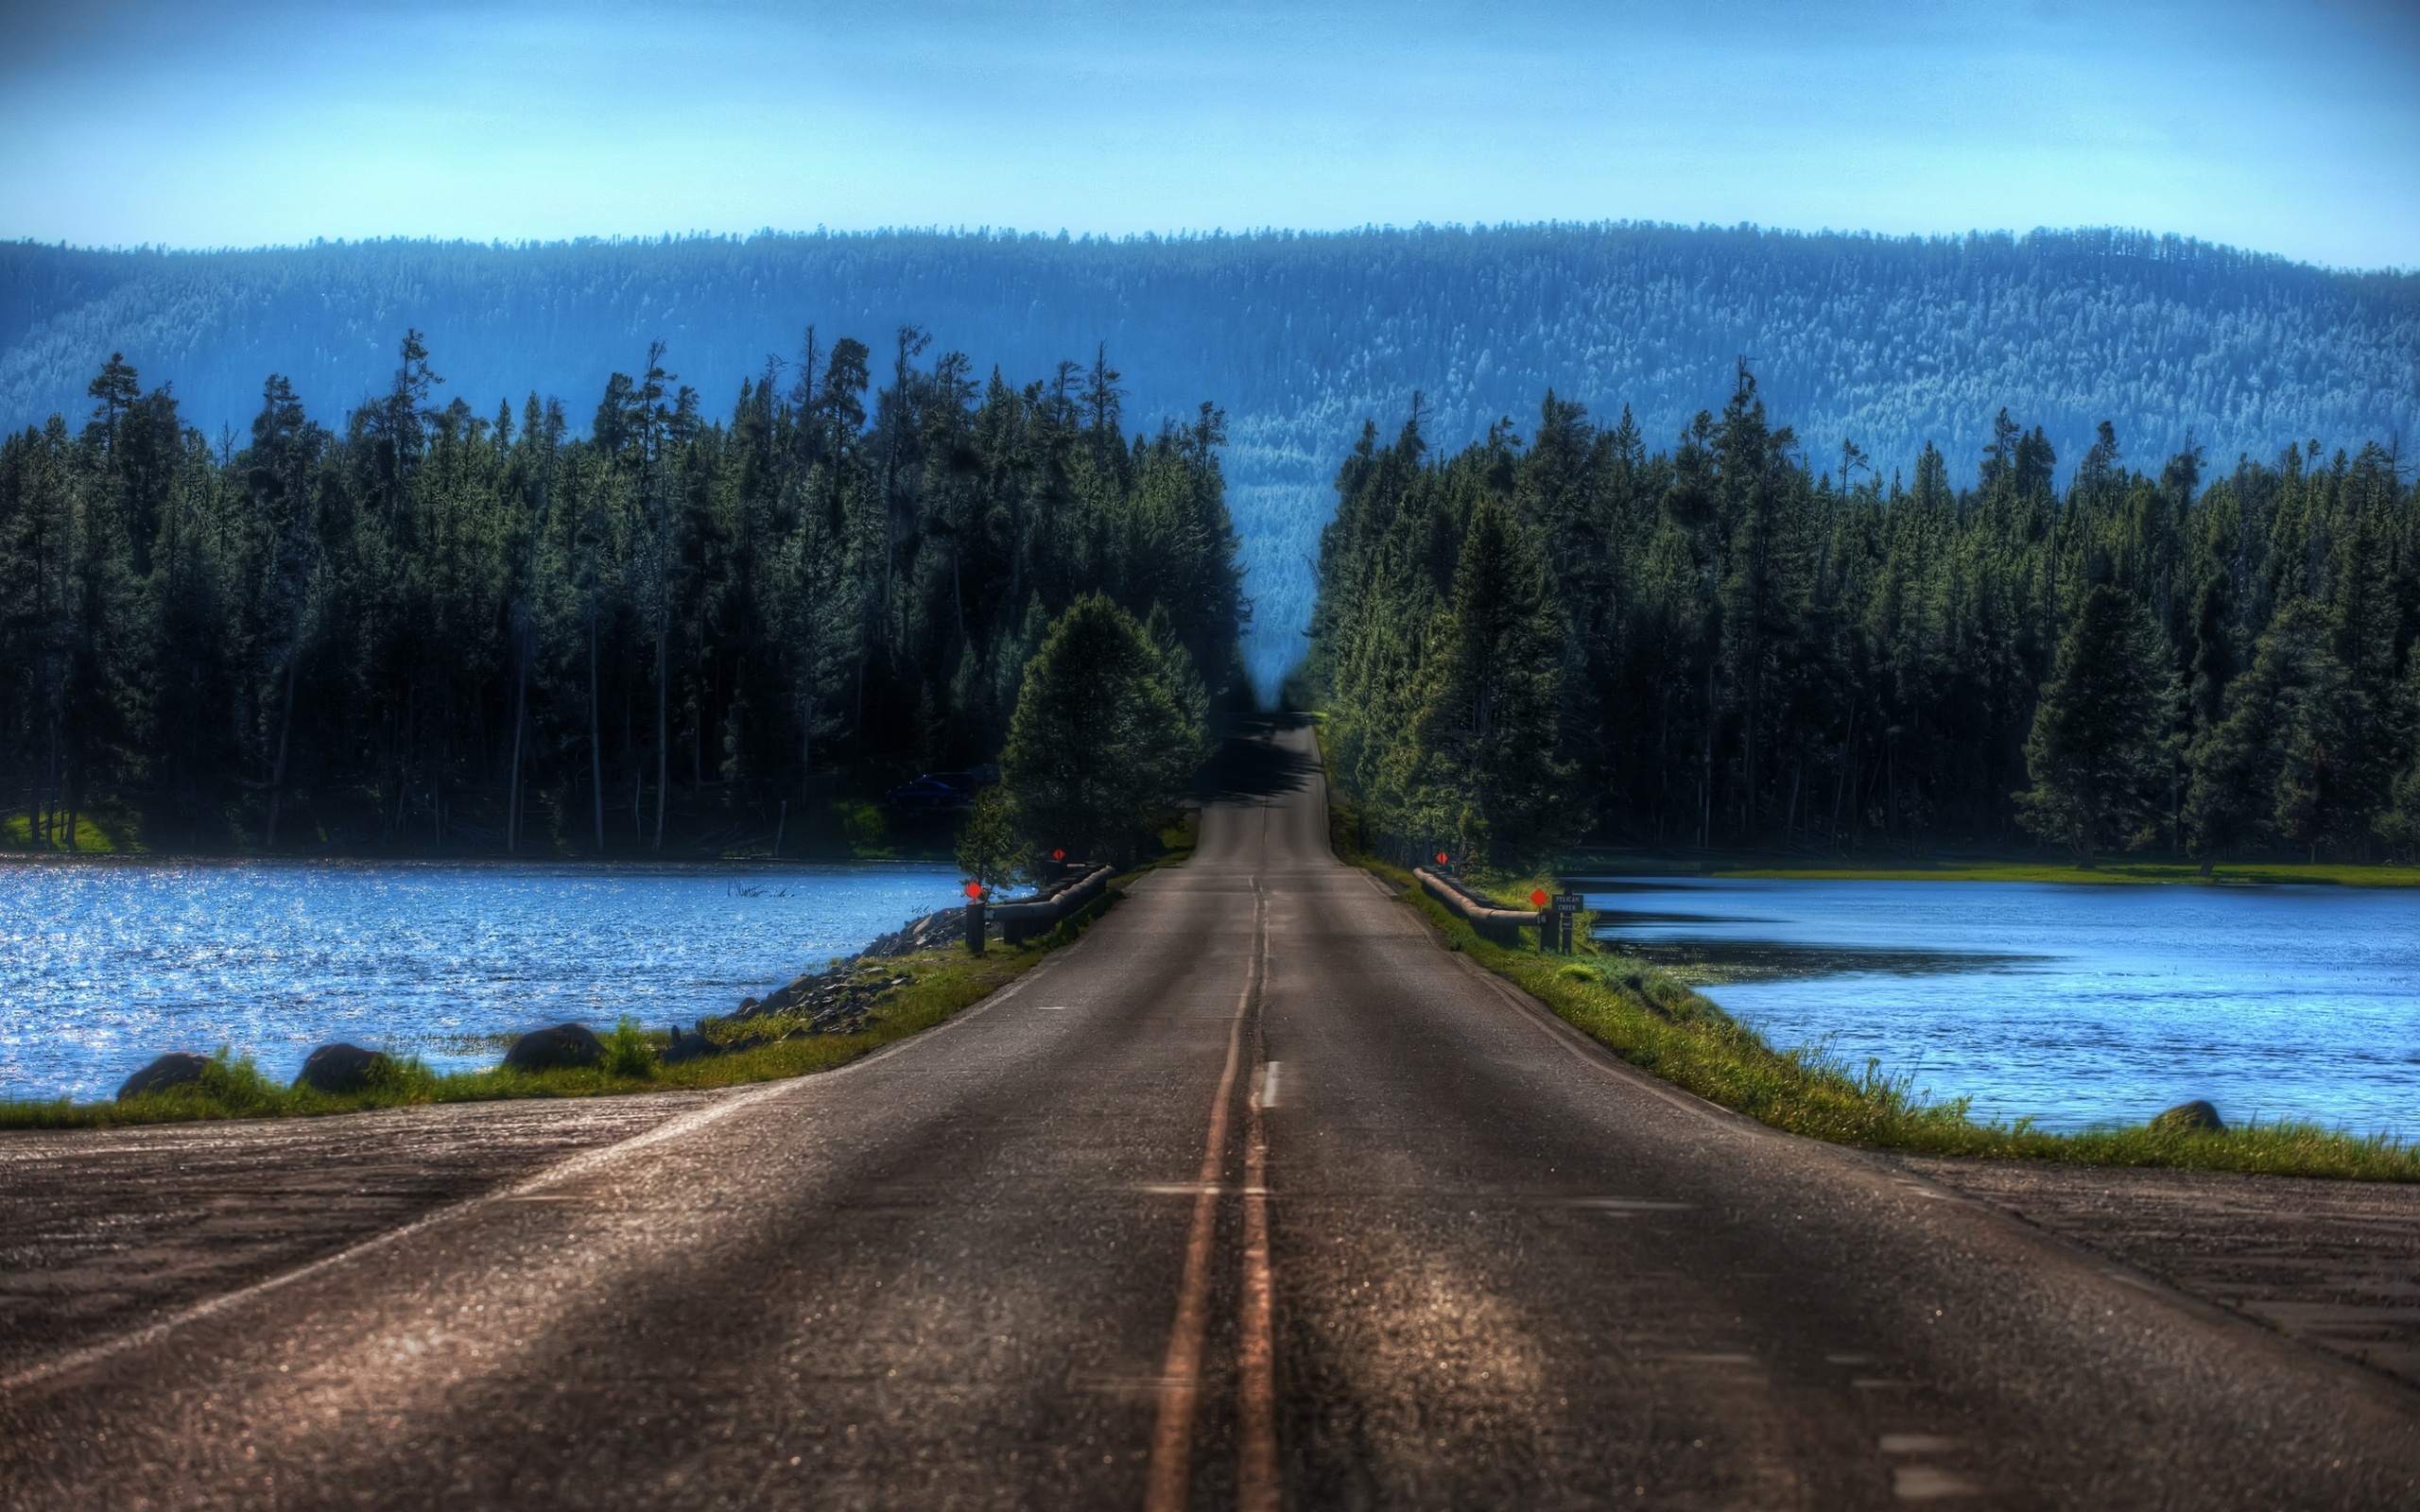 Free Highway Background & Highway Wallpaper Image in HD